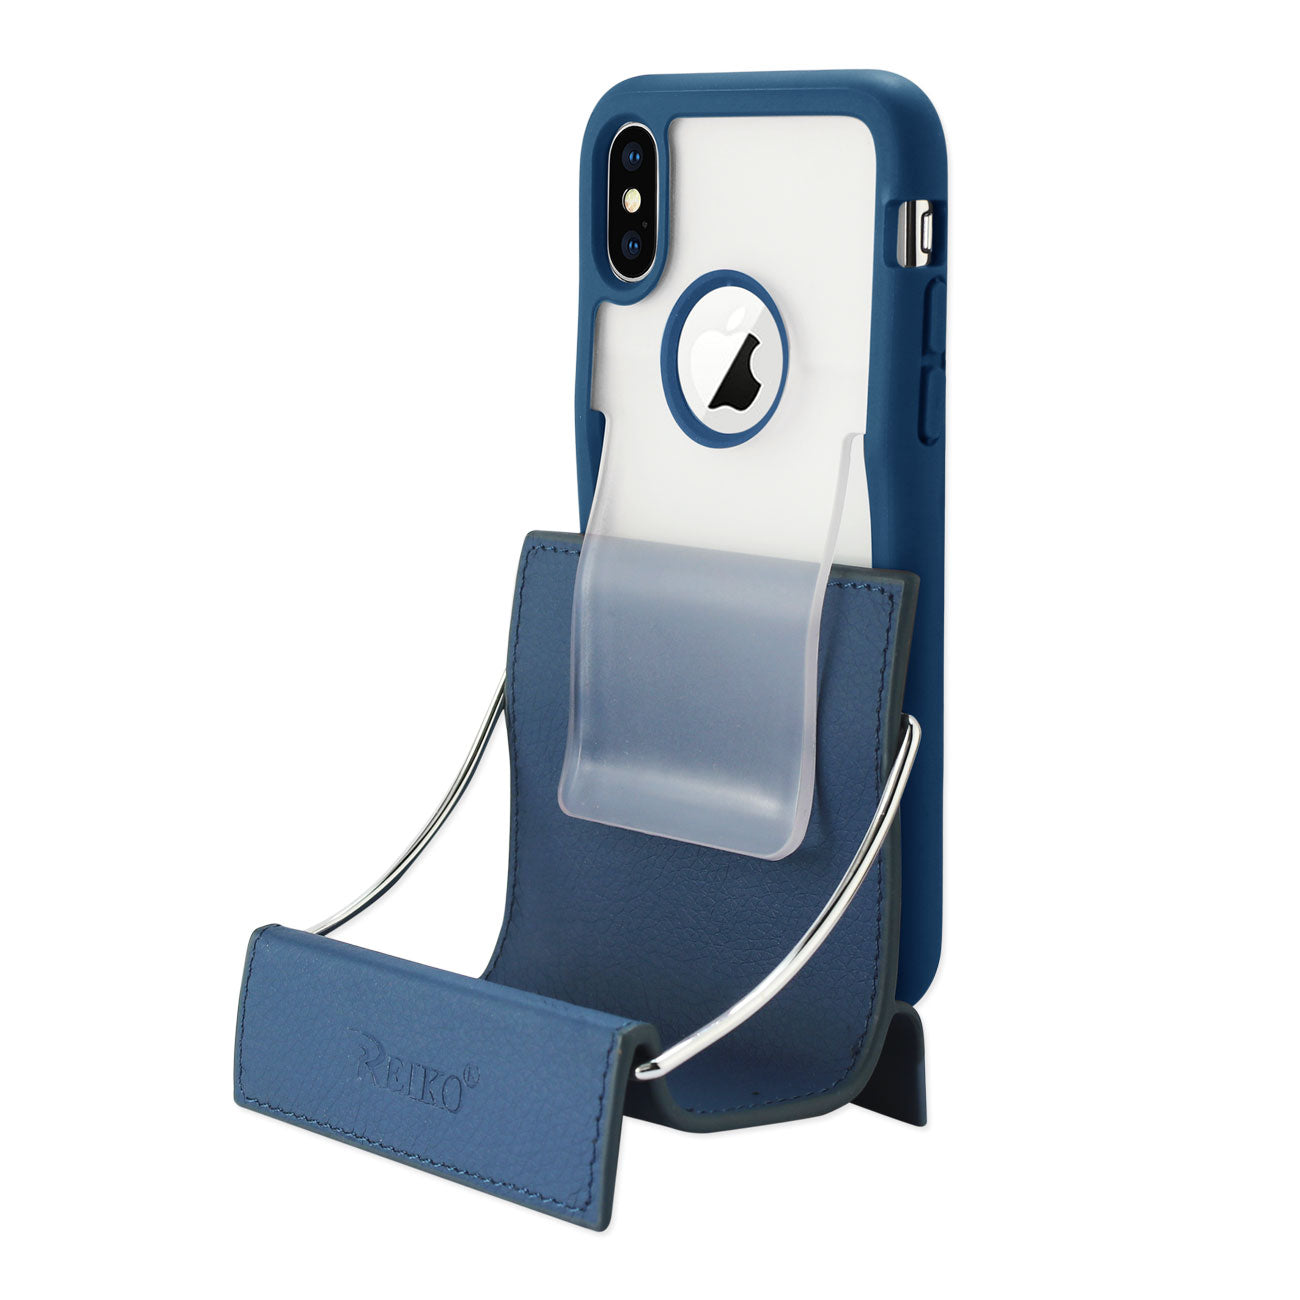 Reiko iPhone X/iPhone XS Belt Clip Polymer Case In Clear Blue